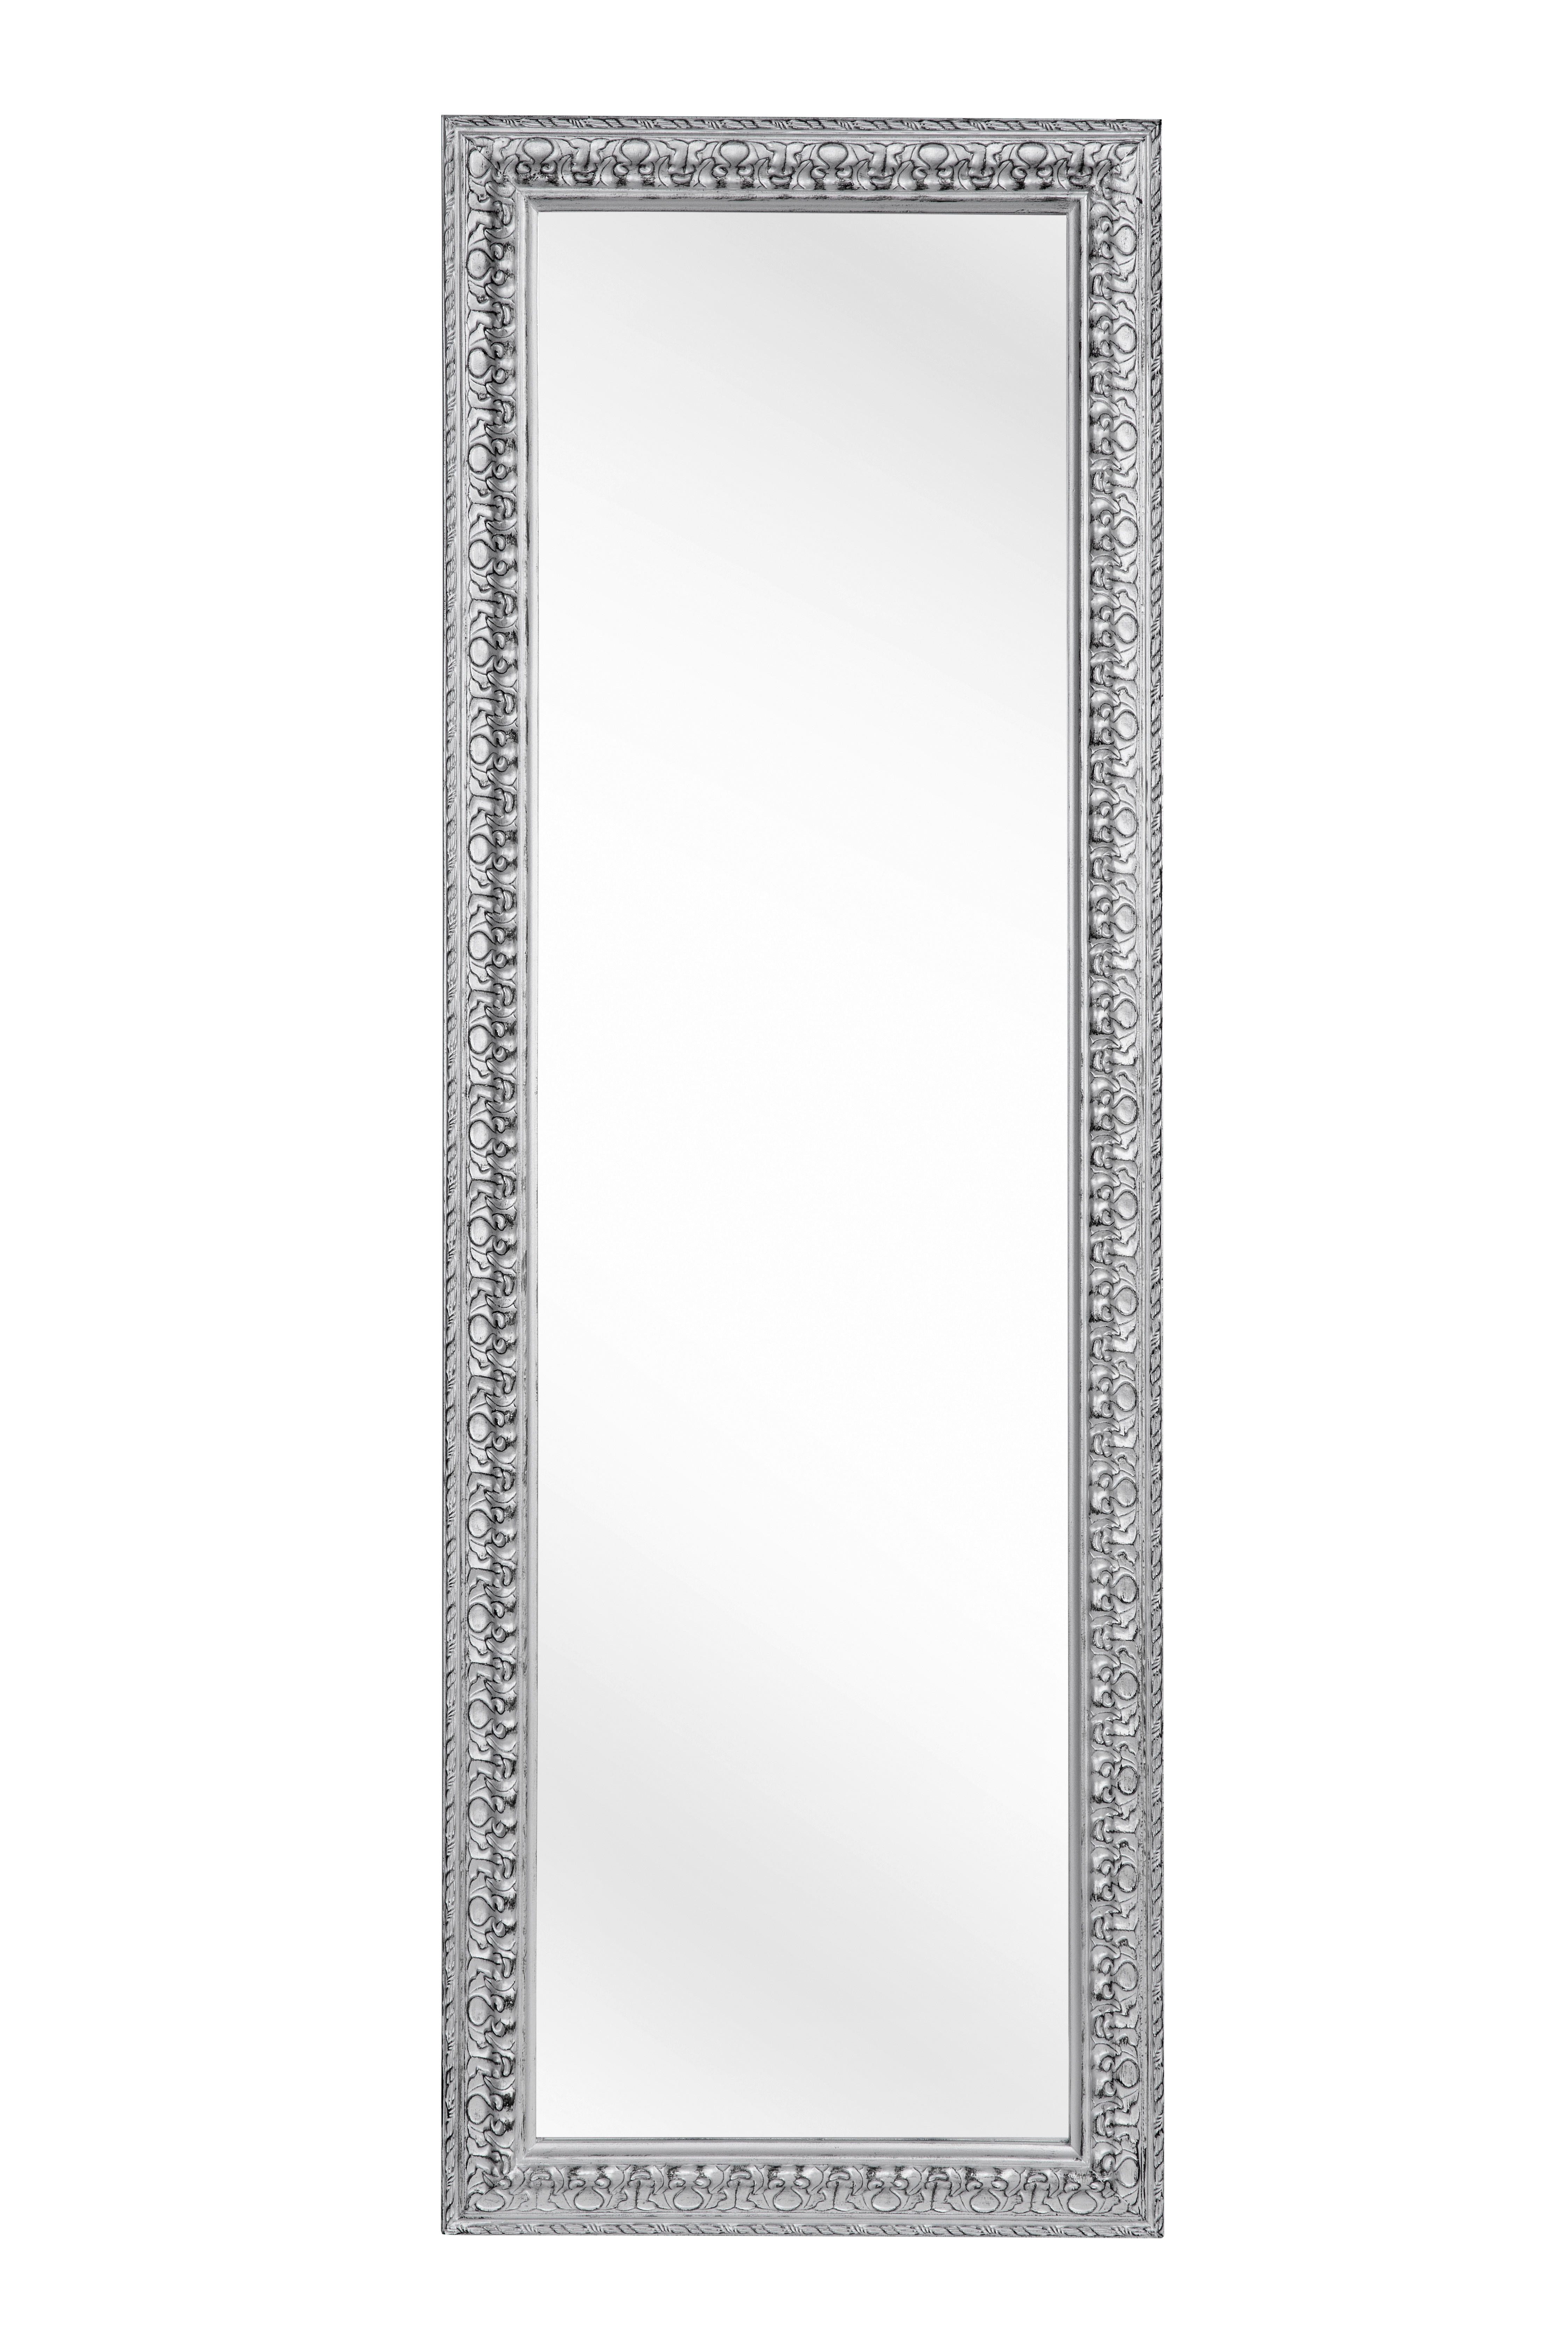 WANDSPIEGEL 50/150/3 cm    - Silberfarben, LIFESTYLE, Glas/Holz (50/150/3cm) - Carryhome